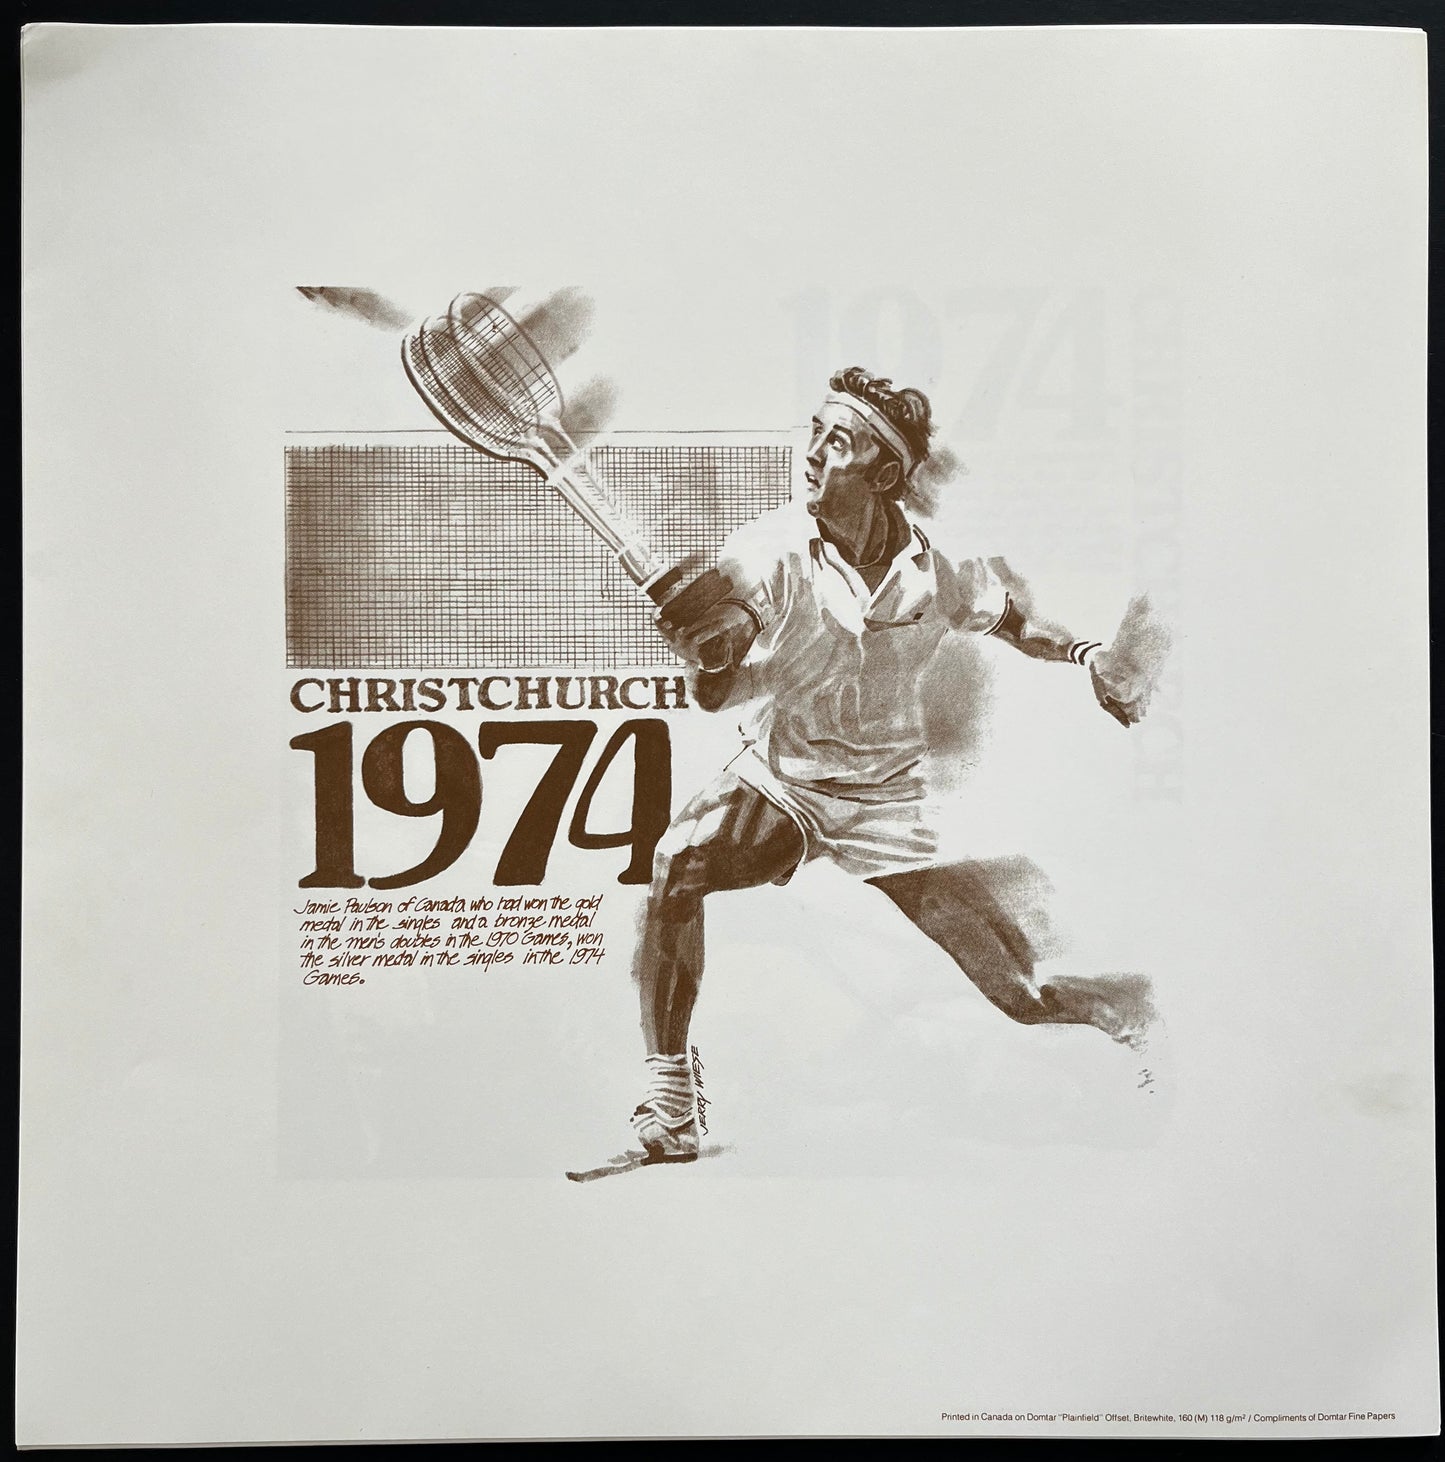 XI Commonwealth Games - Edmonton 1978 - Domtar paper promo